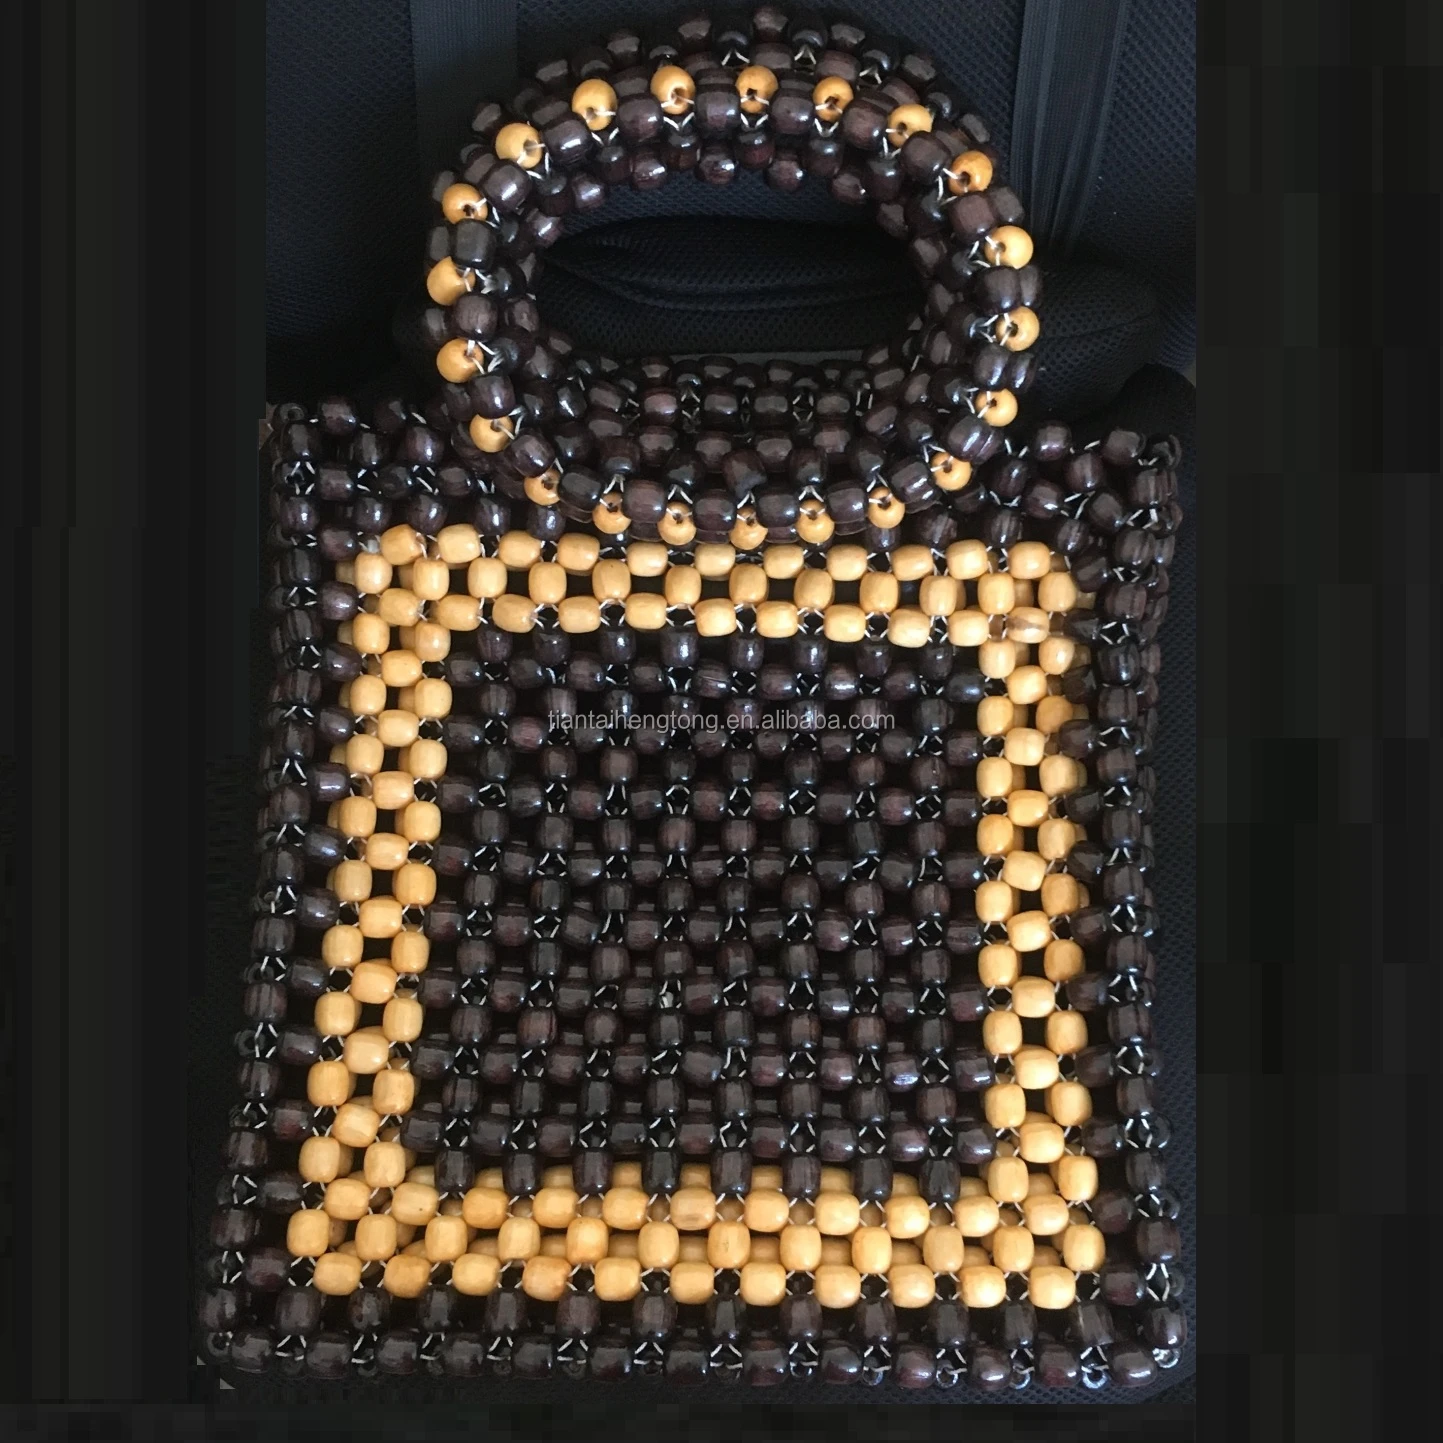 Custom Beaded Bag - Black and Gold